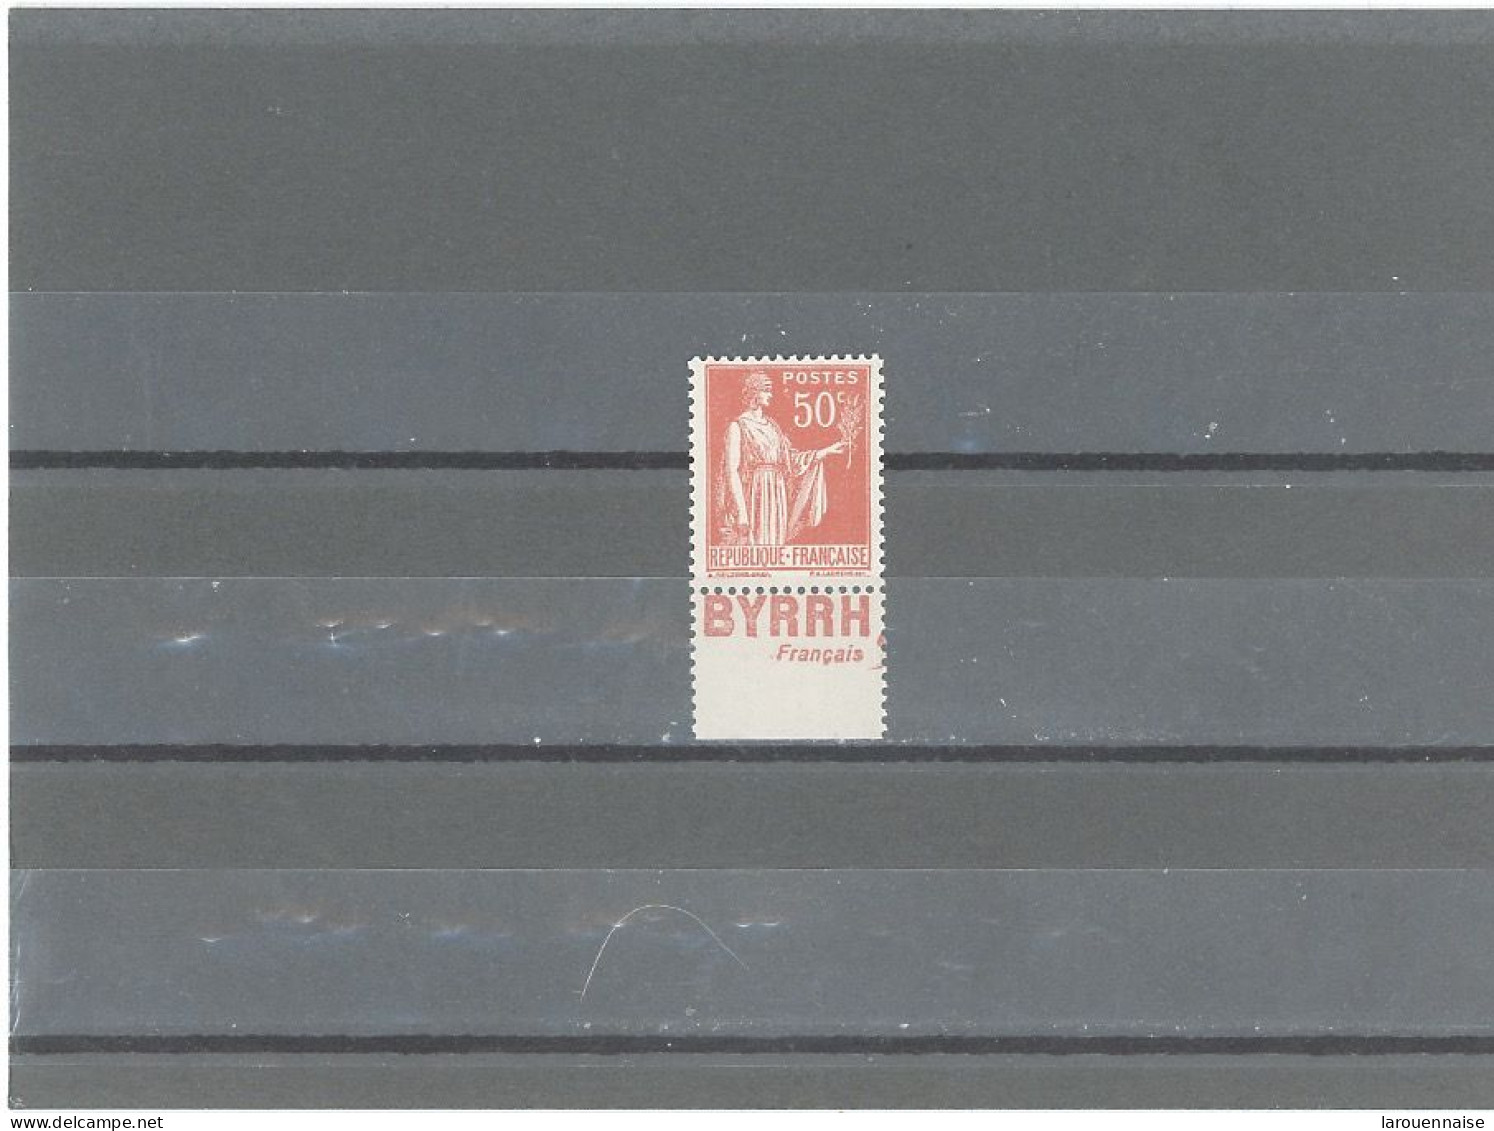 BANDE PUB -N°283e   -PAIX 50c ROUGE  N** - TYPE III -PUB BYRRH (MAURY 224) - Unused Stamps